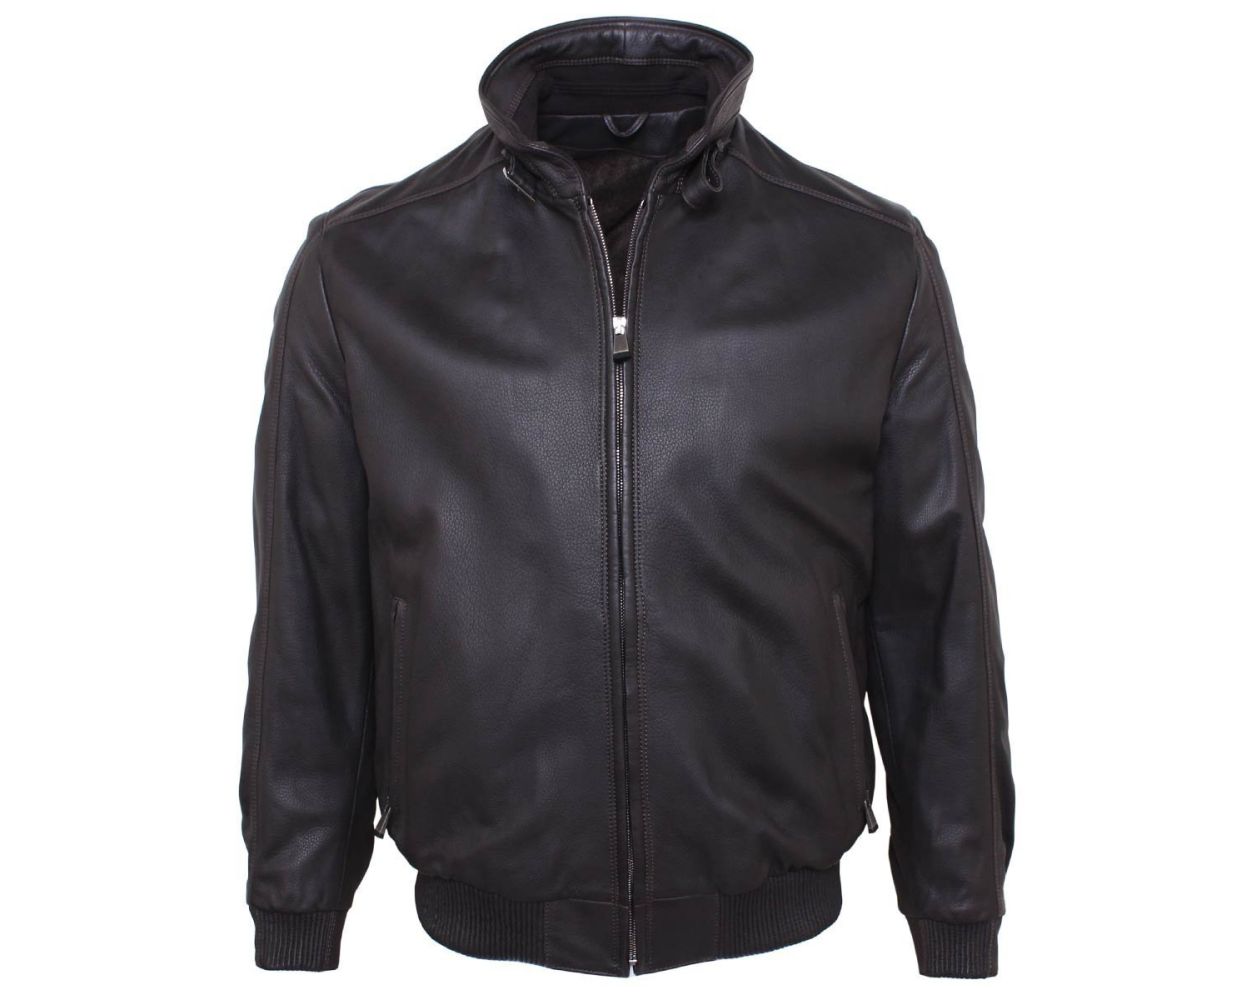 Robert Old Dark Brown Bomber Style Leather Jacket | Robert Old